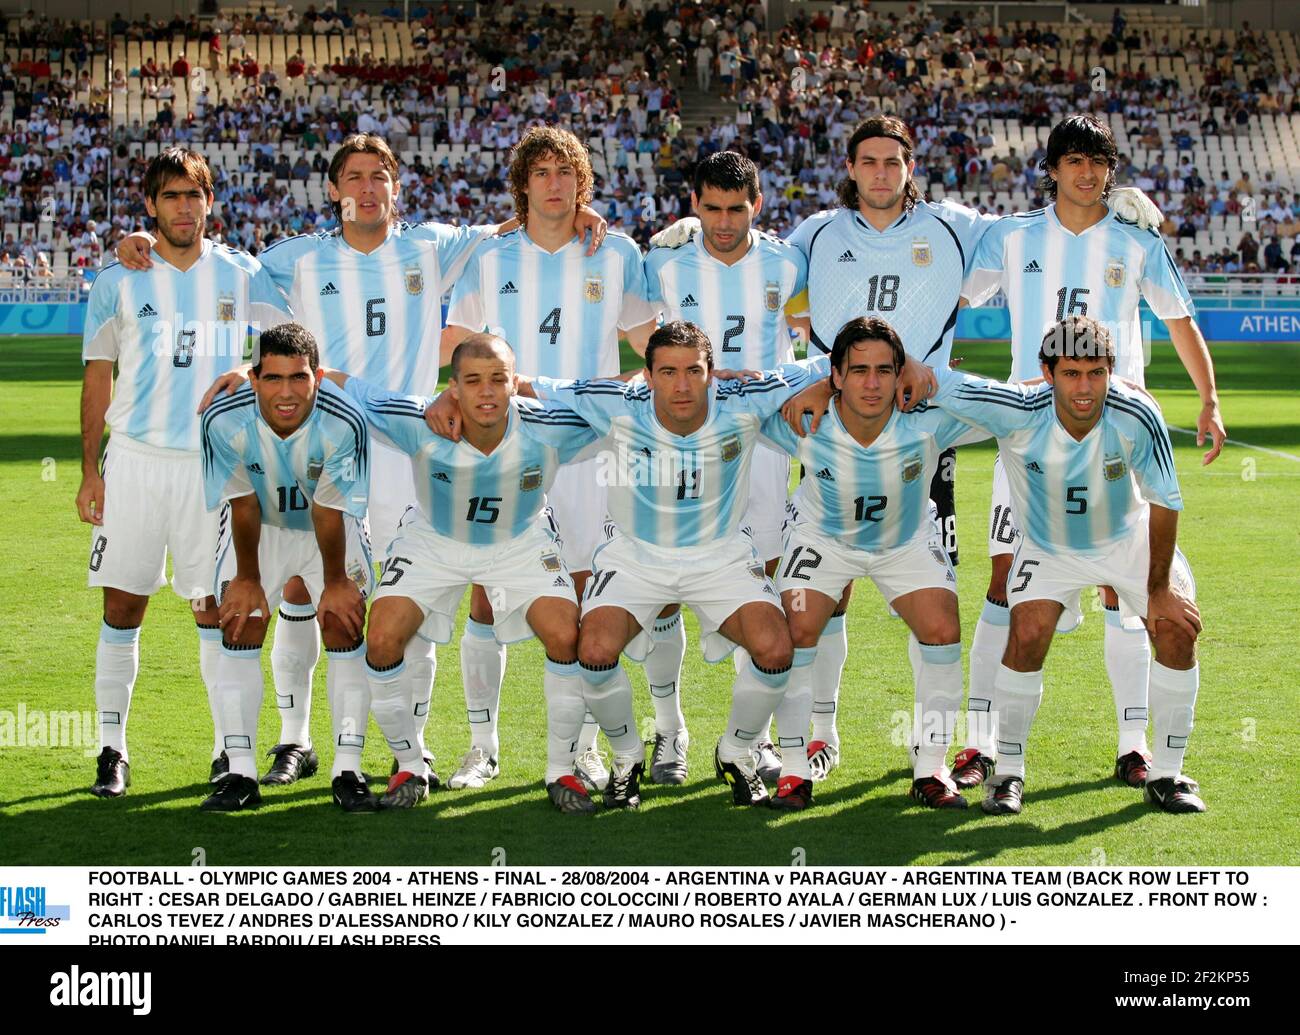 FOOTBALL - OLYMPIC GAMES 2004 - ATHENS - FINAL - 28/08/2004 - ARGENTINA v PARAGUAY - ARGENTINA TEAM (BACK ROW LEFT TO RIGHT : CESAR DELGADO / GABRIEL HEINZE / FABRICIO COLOCCINI / ROBERTO AYALA / GERMAN LUX / LUIS GONZALEZ . FRONT ROW : CARLOS TEVEZ / ANDRES D'ALESSANDRO / KILY GONZALEZ / MAURO ROSALES / JAVIER MASCHERANO ) - PHOTO DANIEL BARDOU / FLASH PRESS Stock Photo